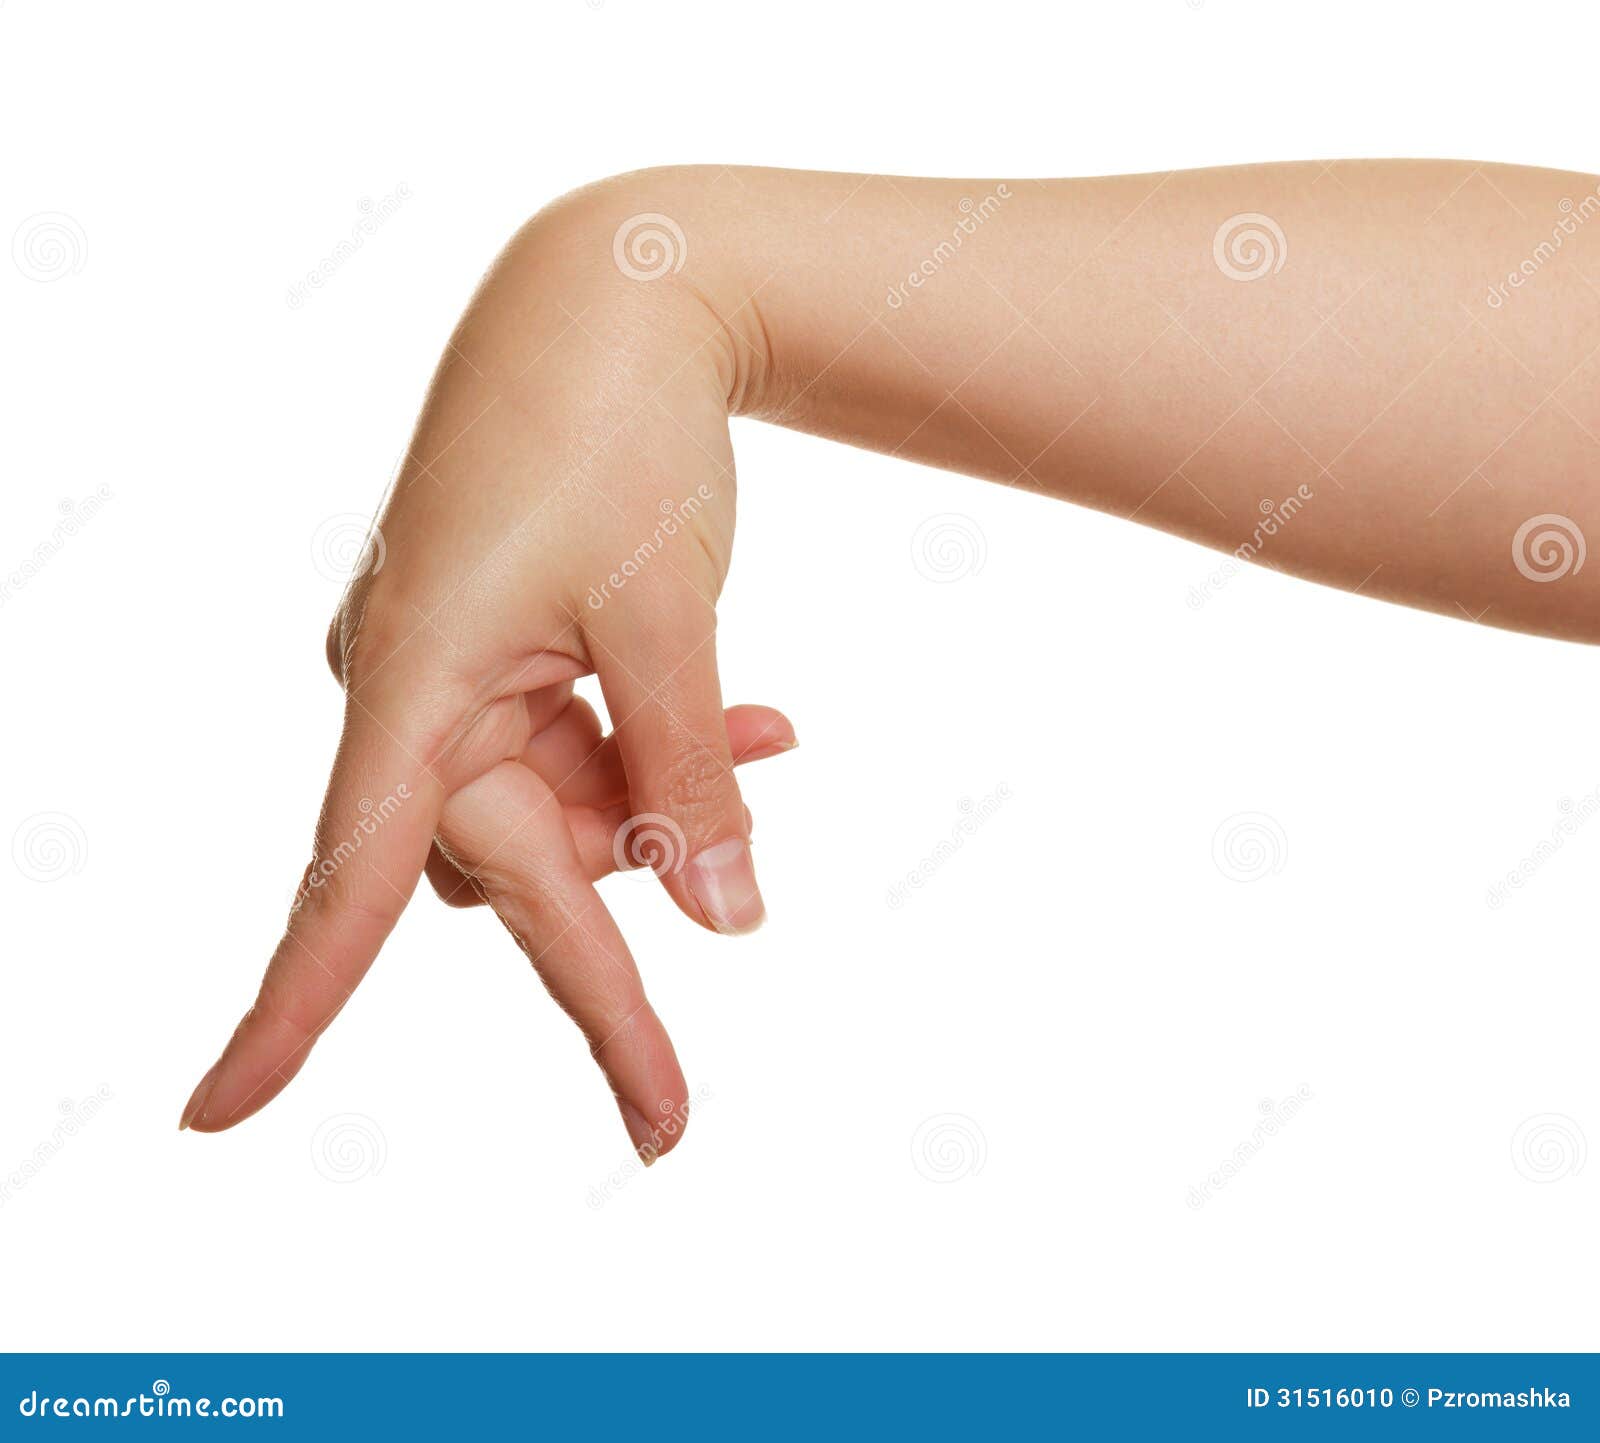 Шагающие пальцы. Женская рука. Рука на белом фоне. Руки идут. Рука с пальцем белый фон.